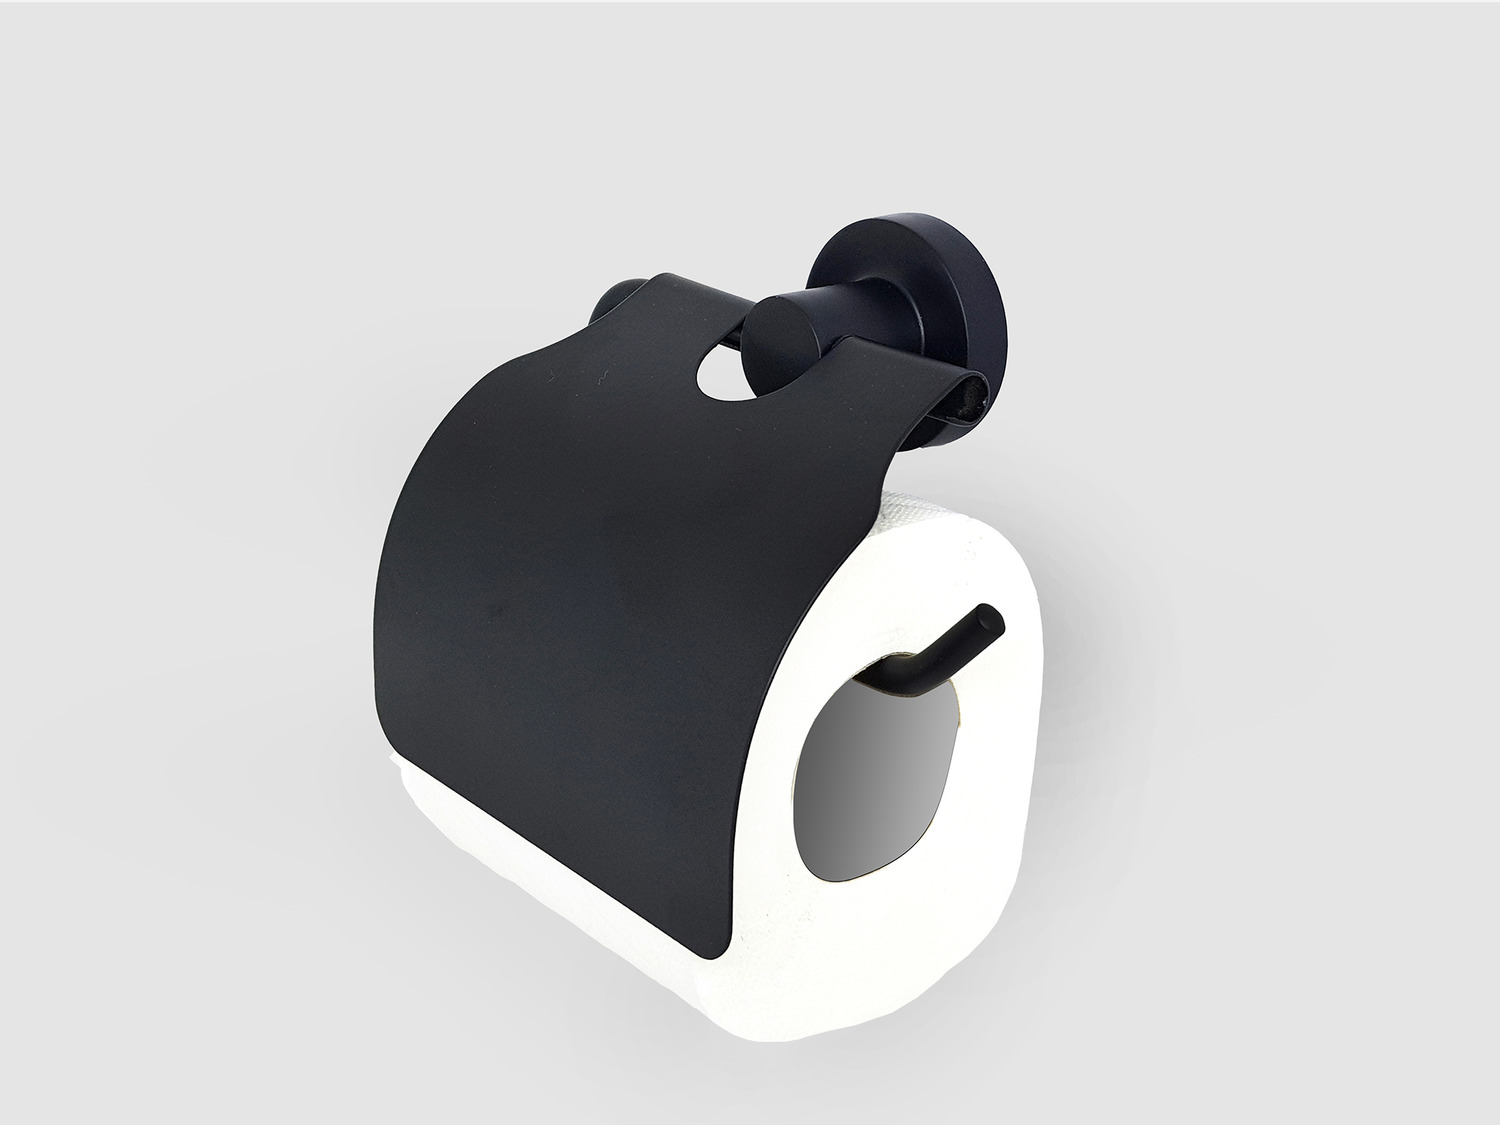 Aqua - mit Pap schwarz Bagno ZERO matt Abdeckung Toilettenpapierhalter